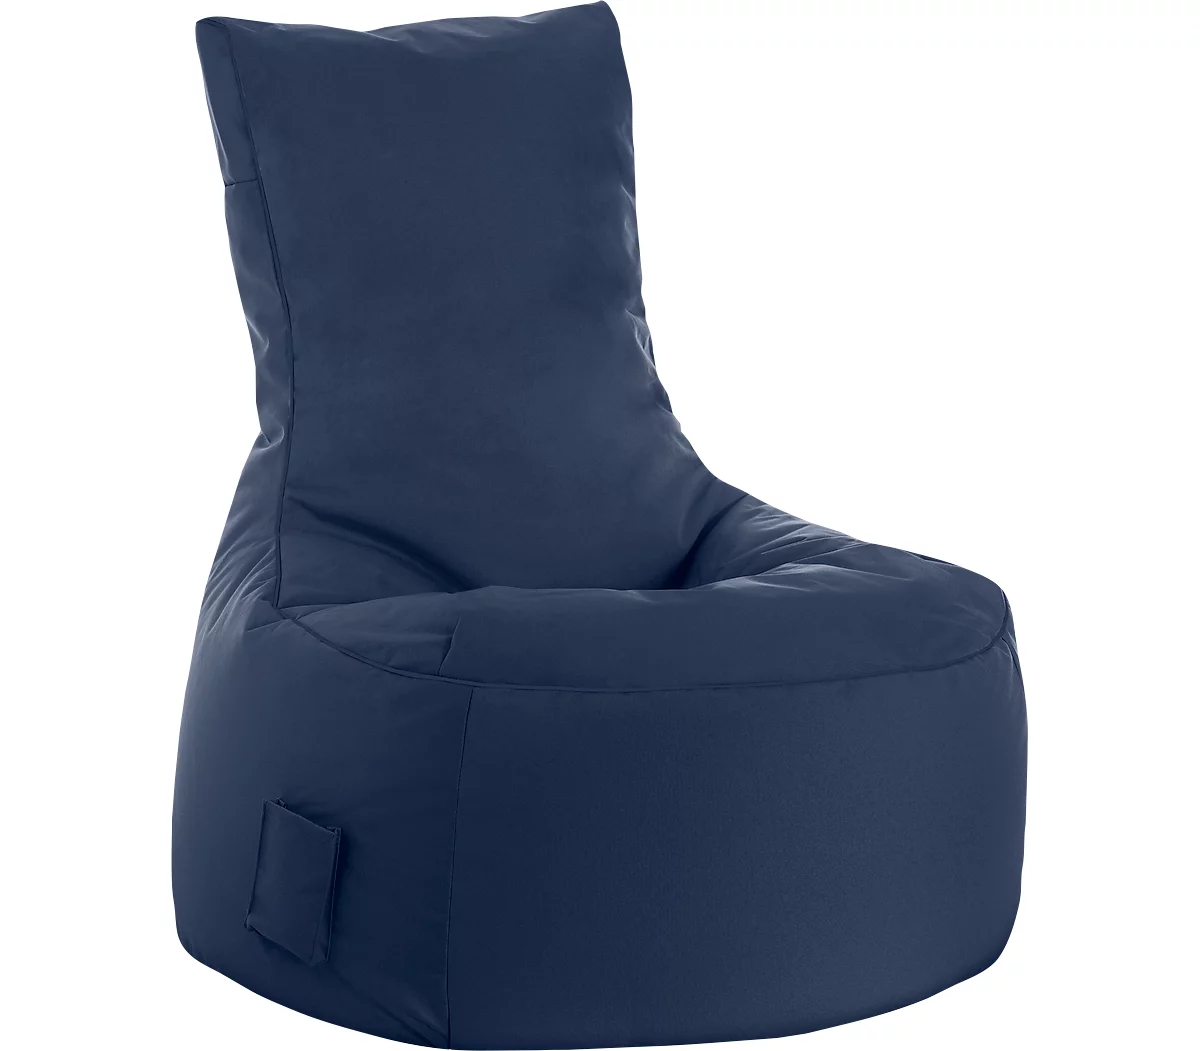 Sitzsack swing scuba®, 100% Polyester, abwaschbar, B 650 x T 900 x H 950 mm, jeansblau